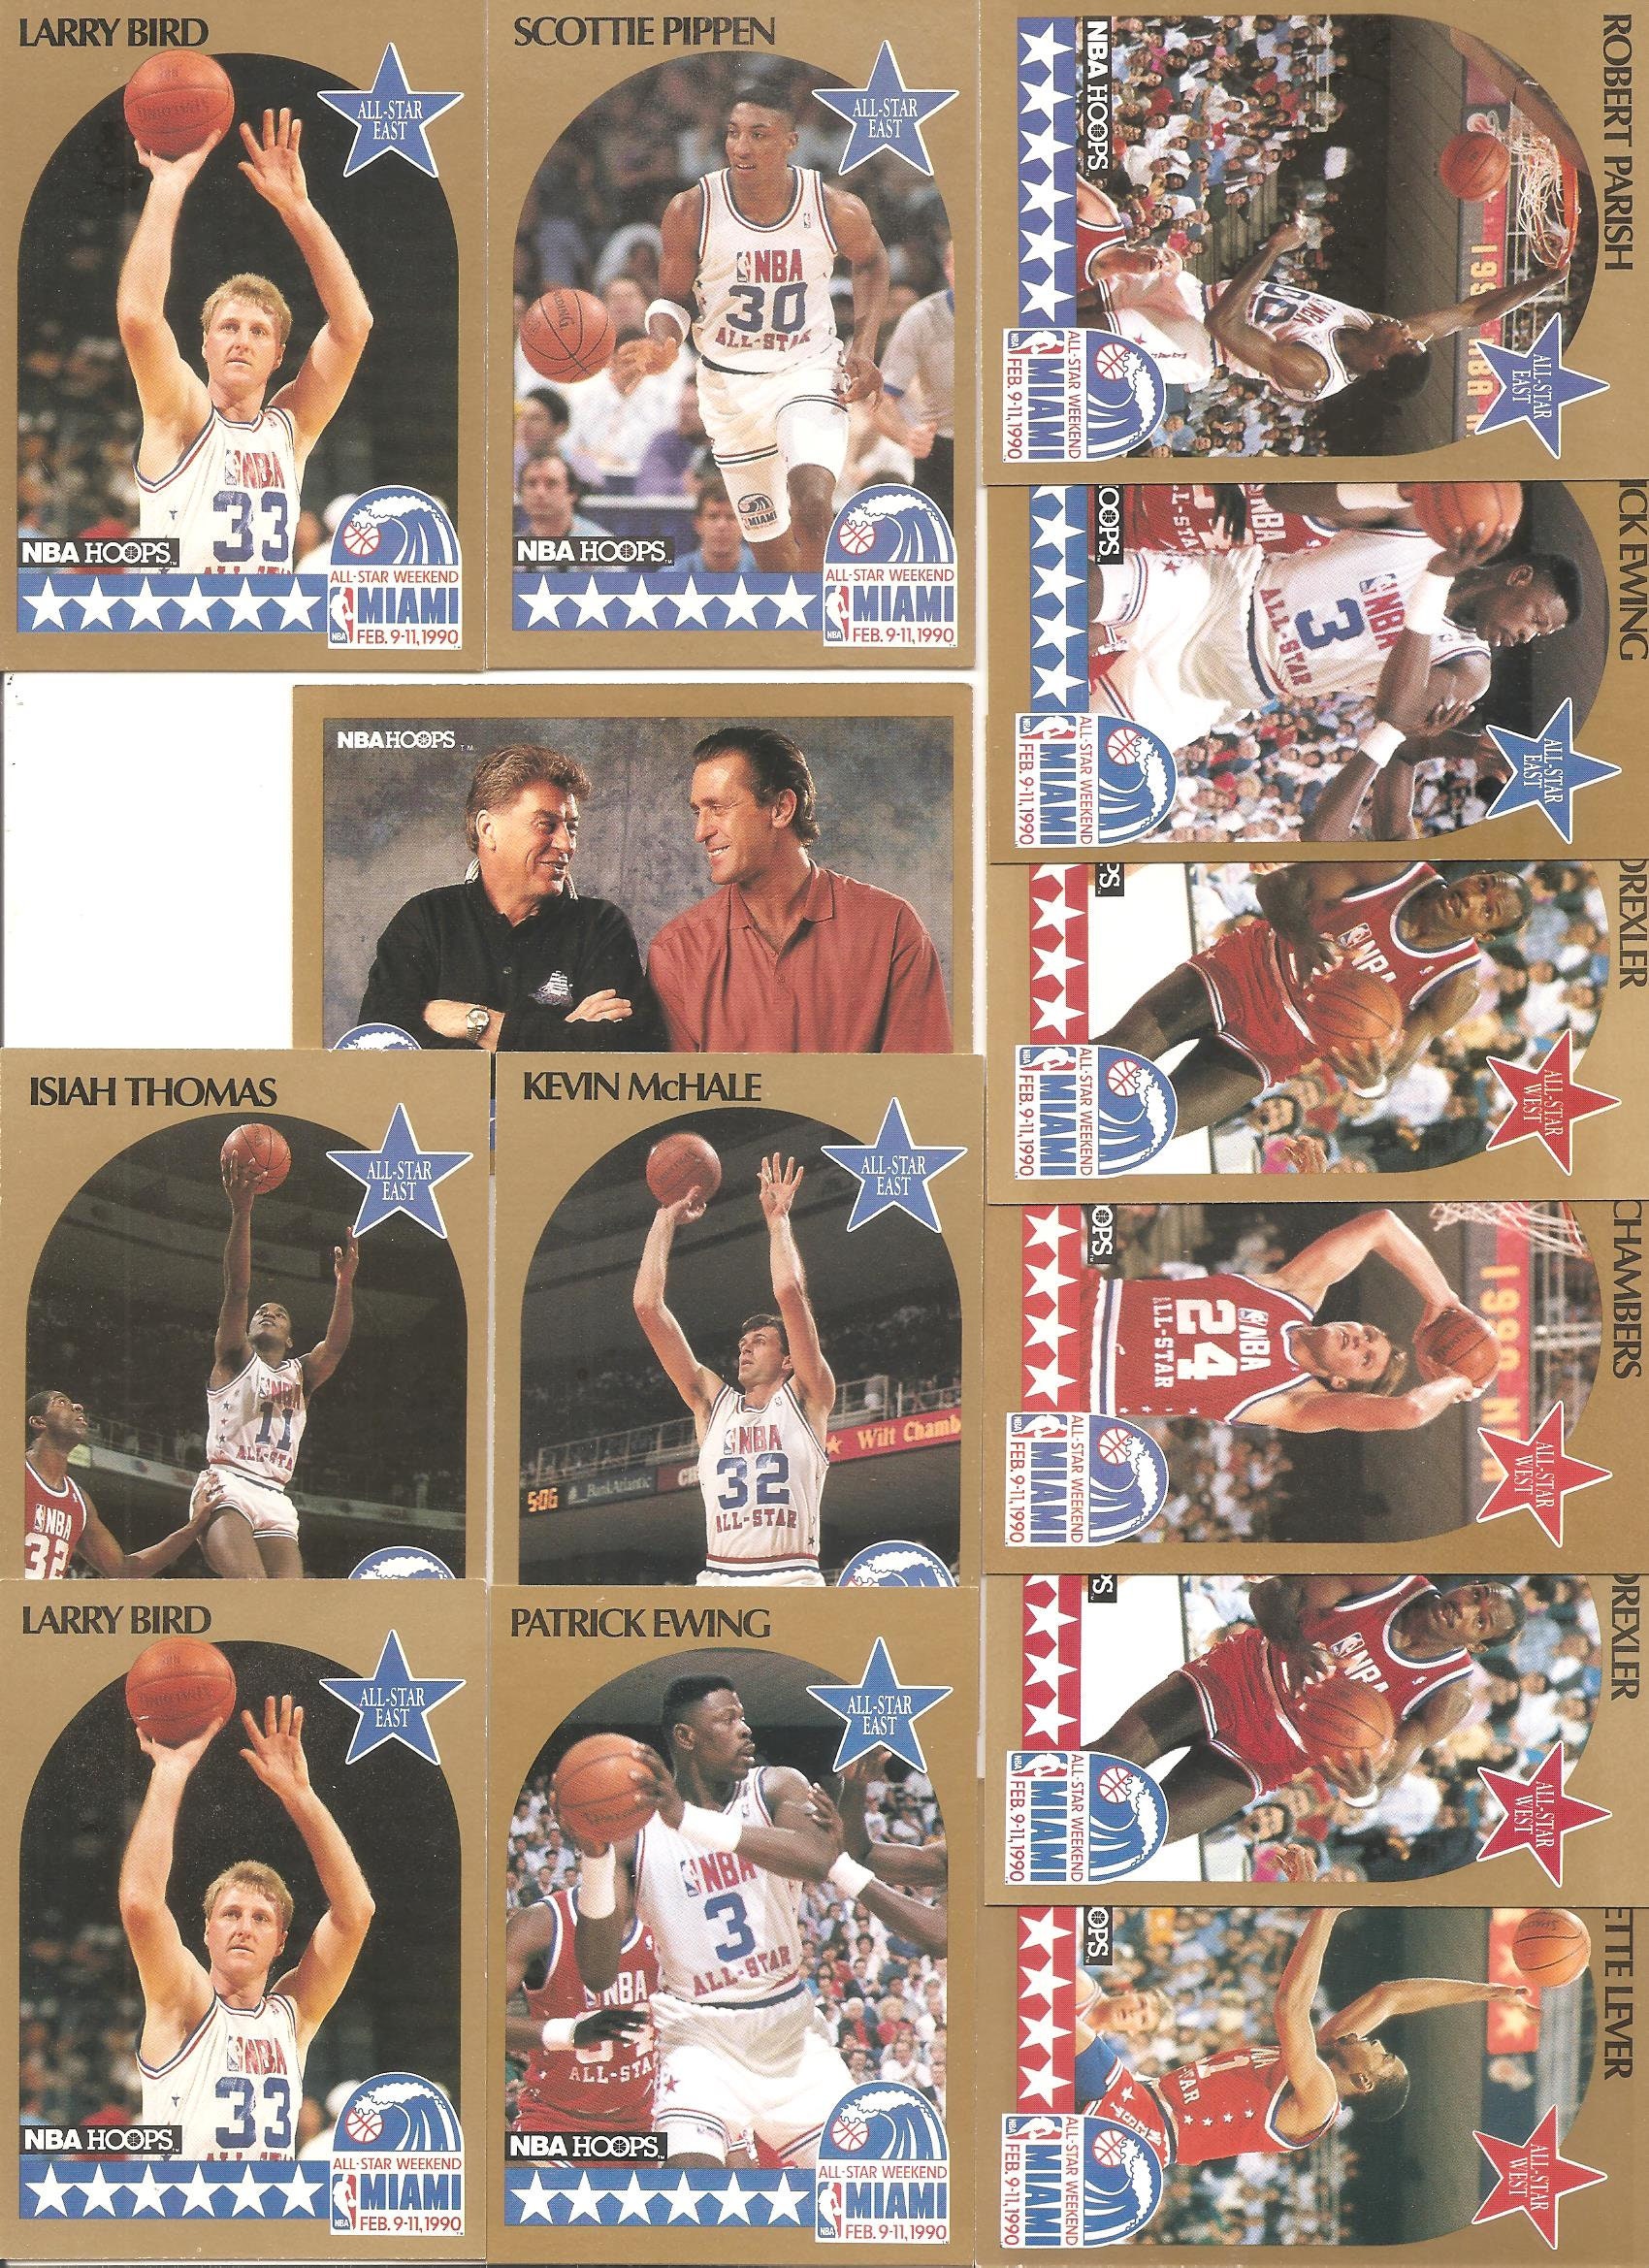 NBA All-Star uniforms since 1990